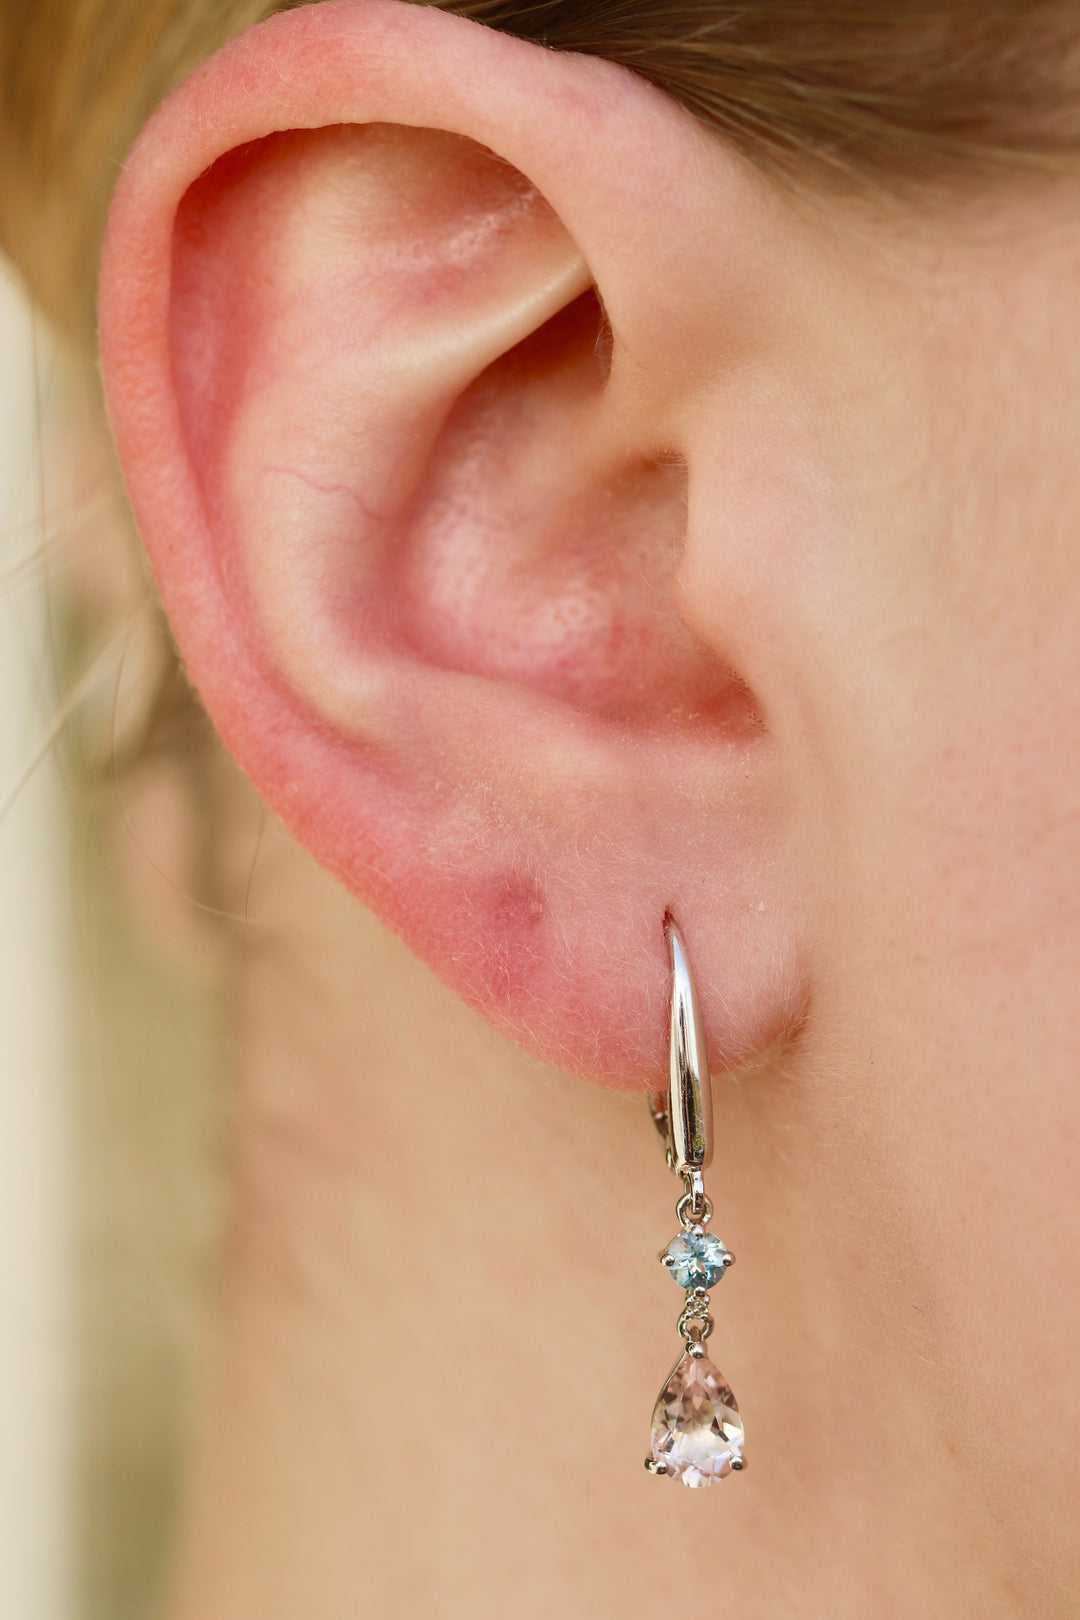 Aquamarine and morganite earrings in 10k white gold